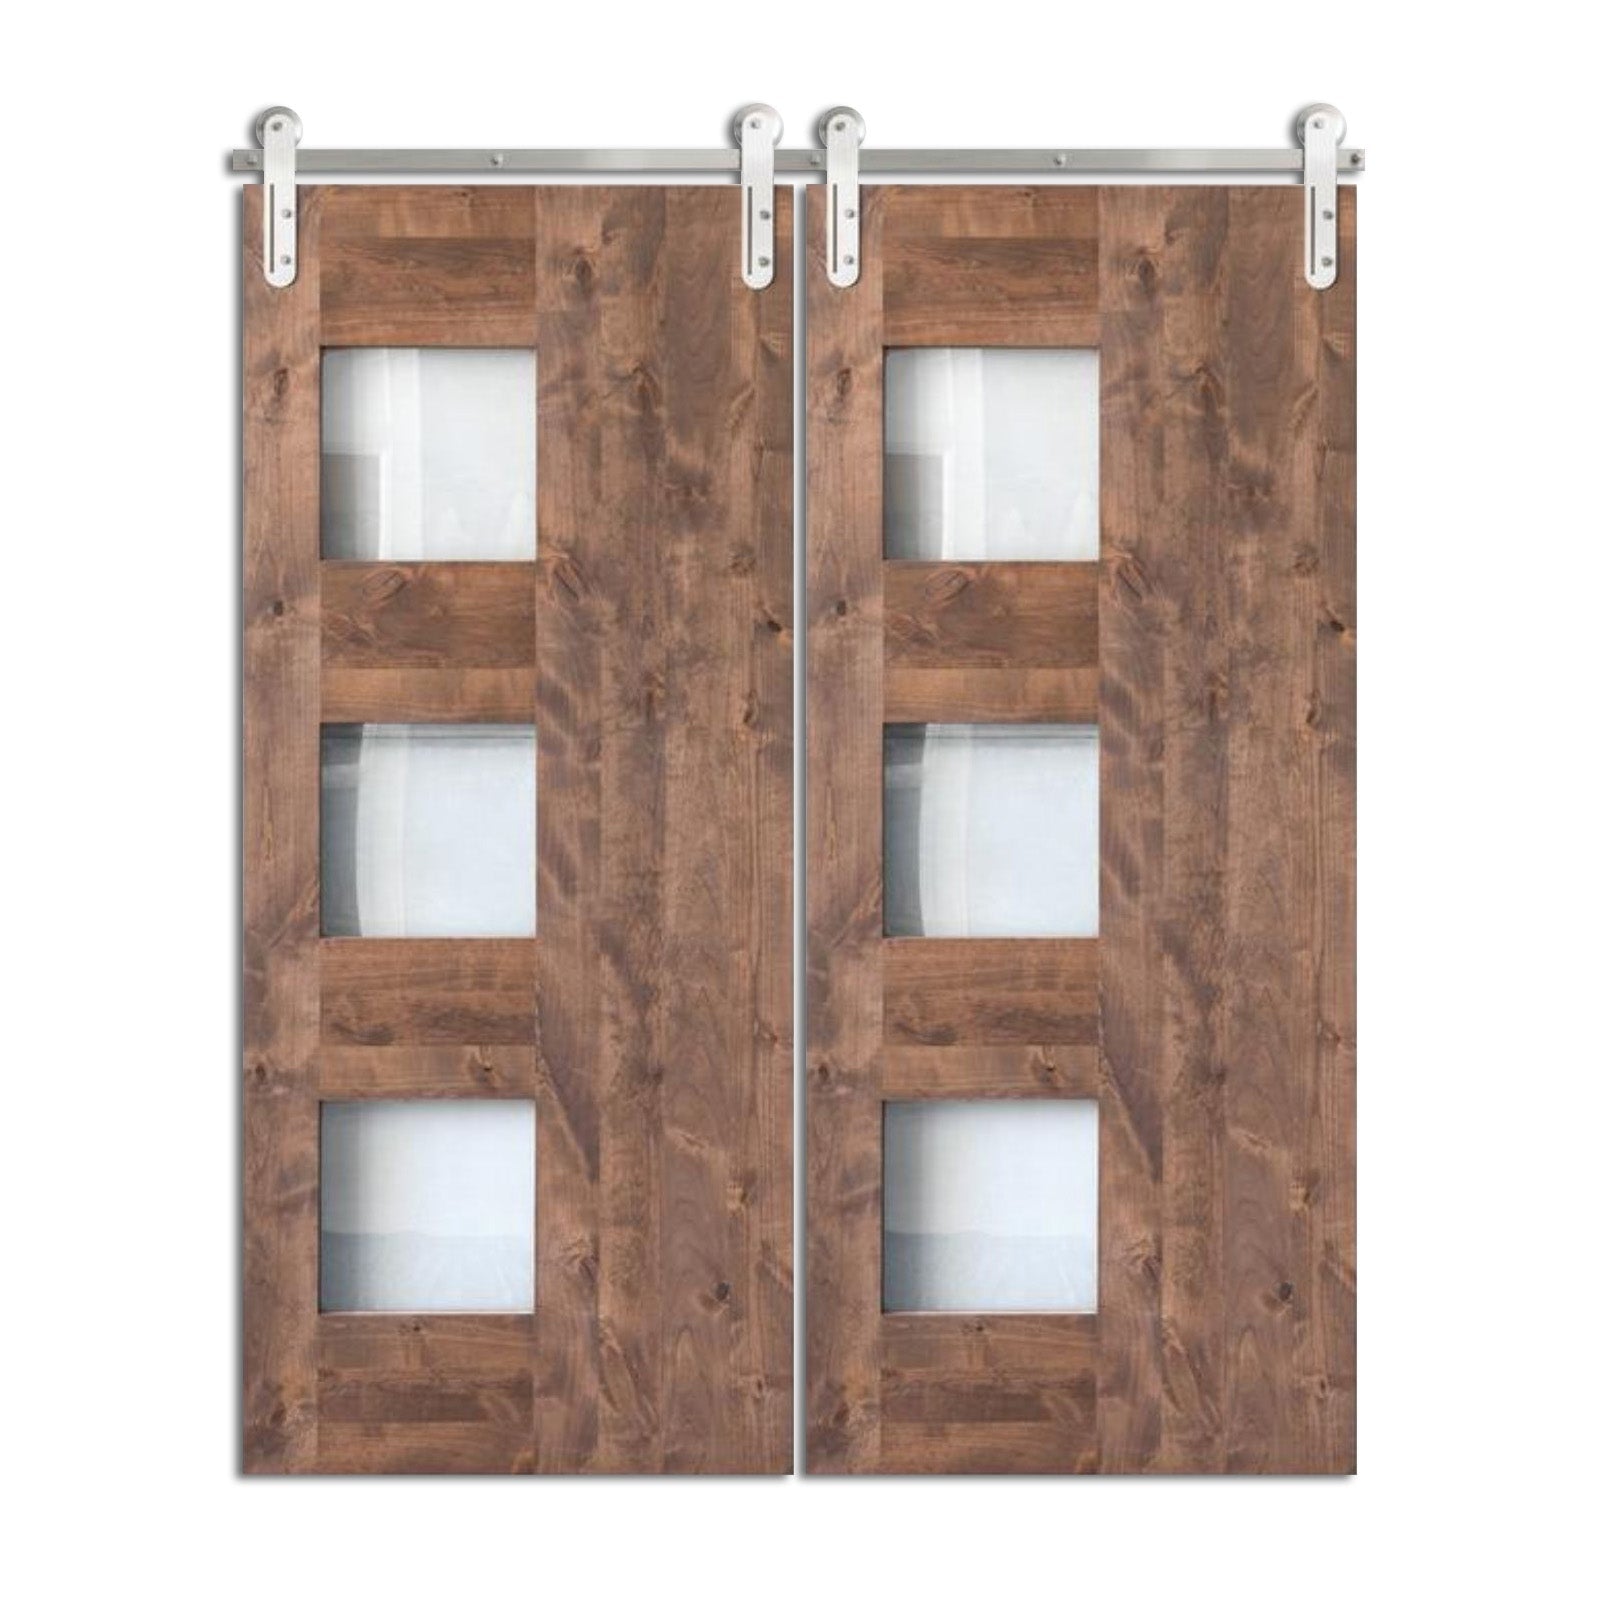 Hasberge - Interior Three Glass Panel Design Double Barn Door